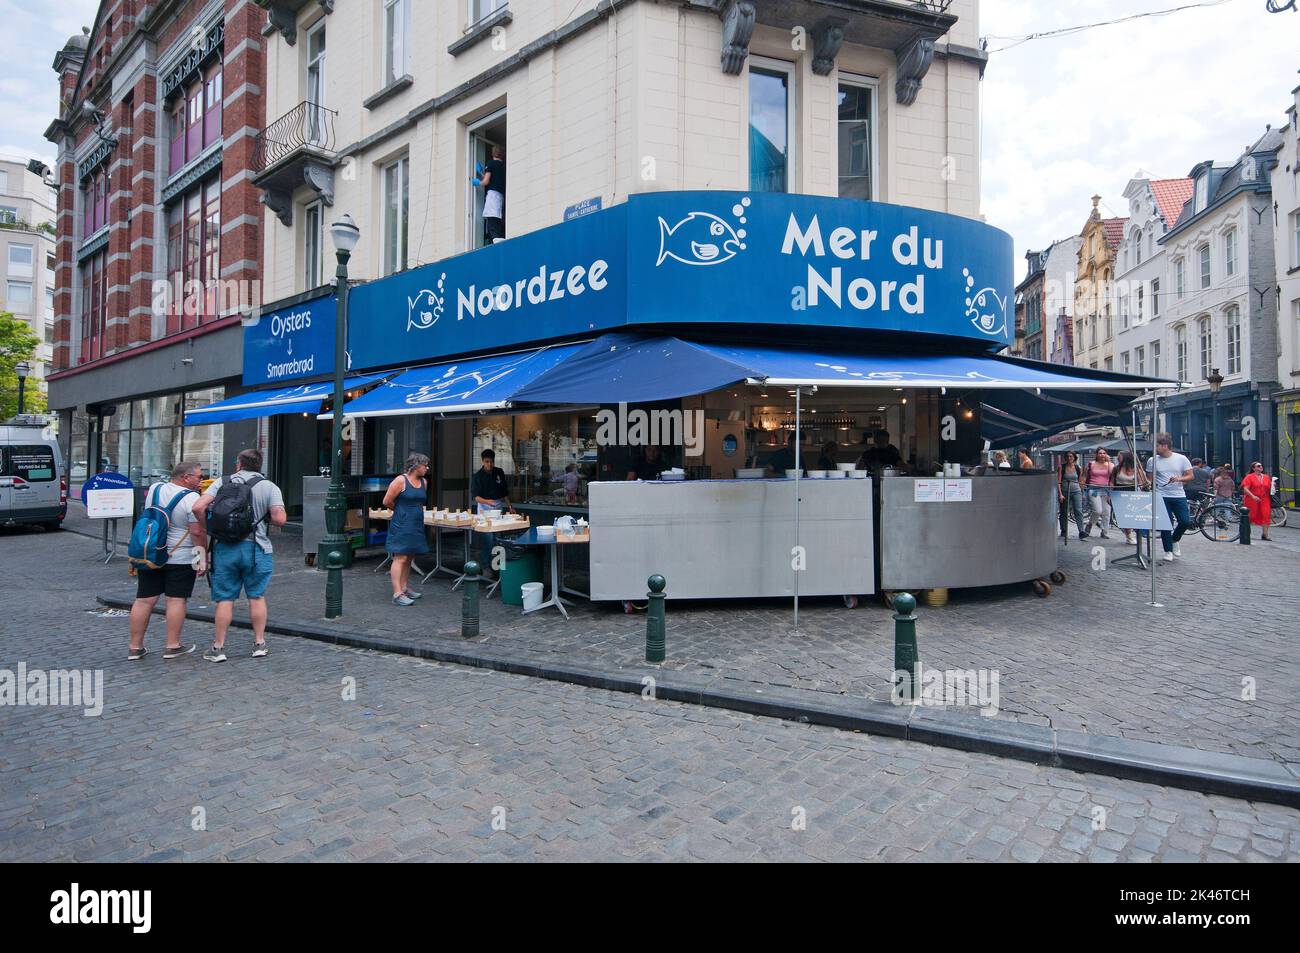 Seafood restaurant Mer du Nord in Rue Sainte-Catherine, Brussels, Belgium Stock Photo